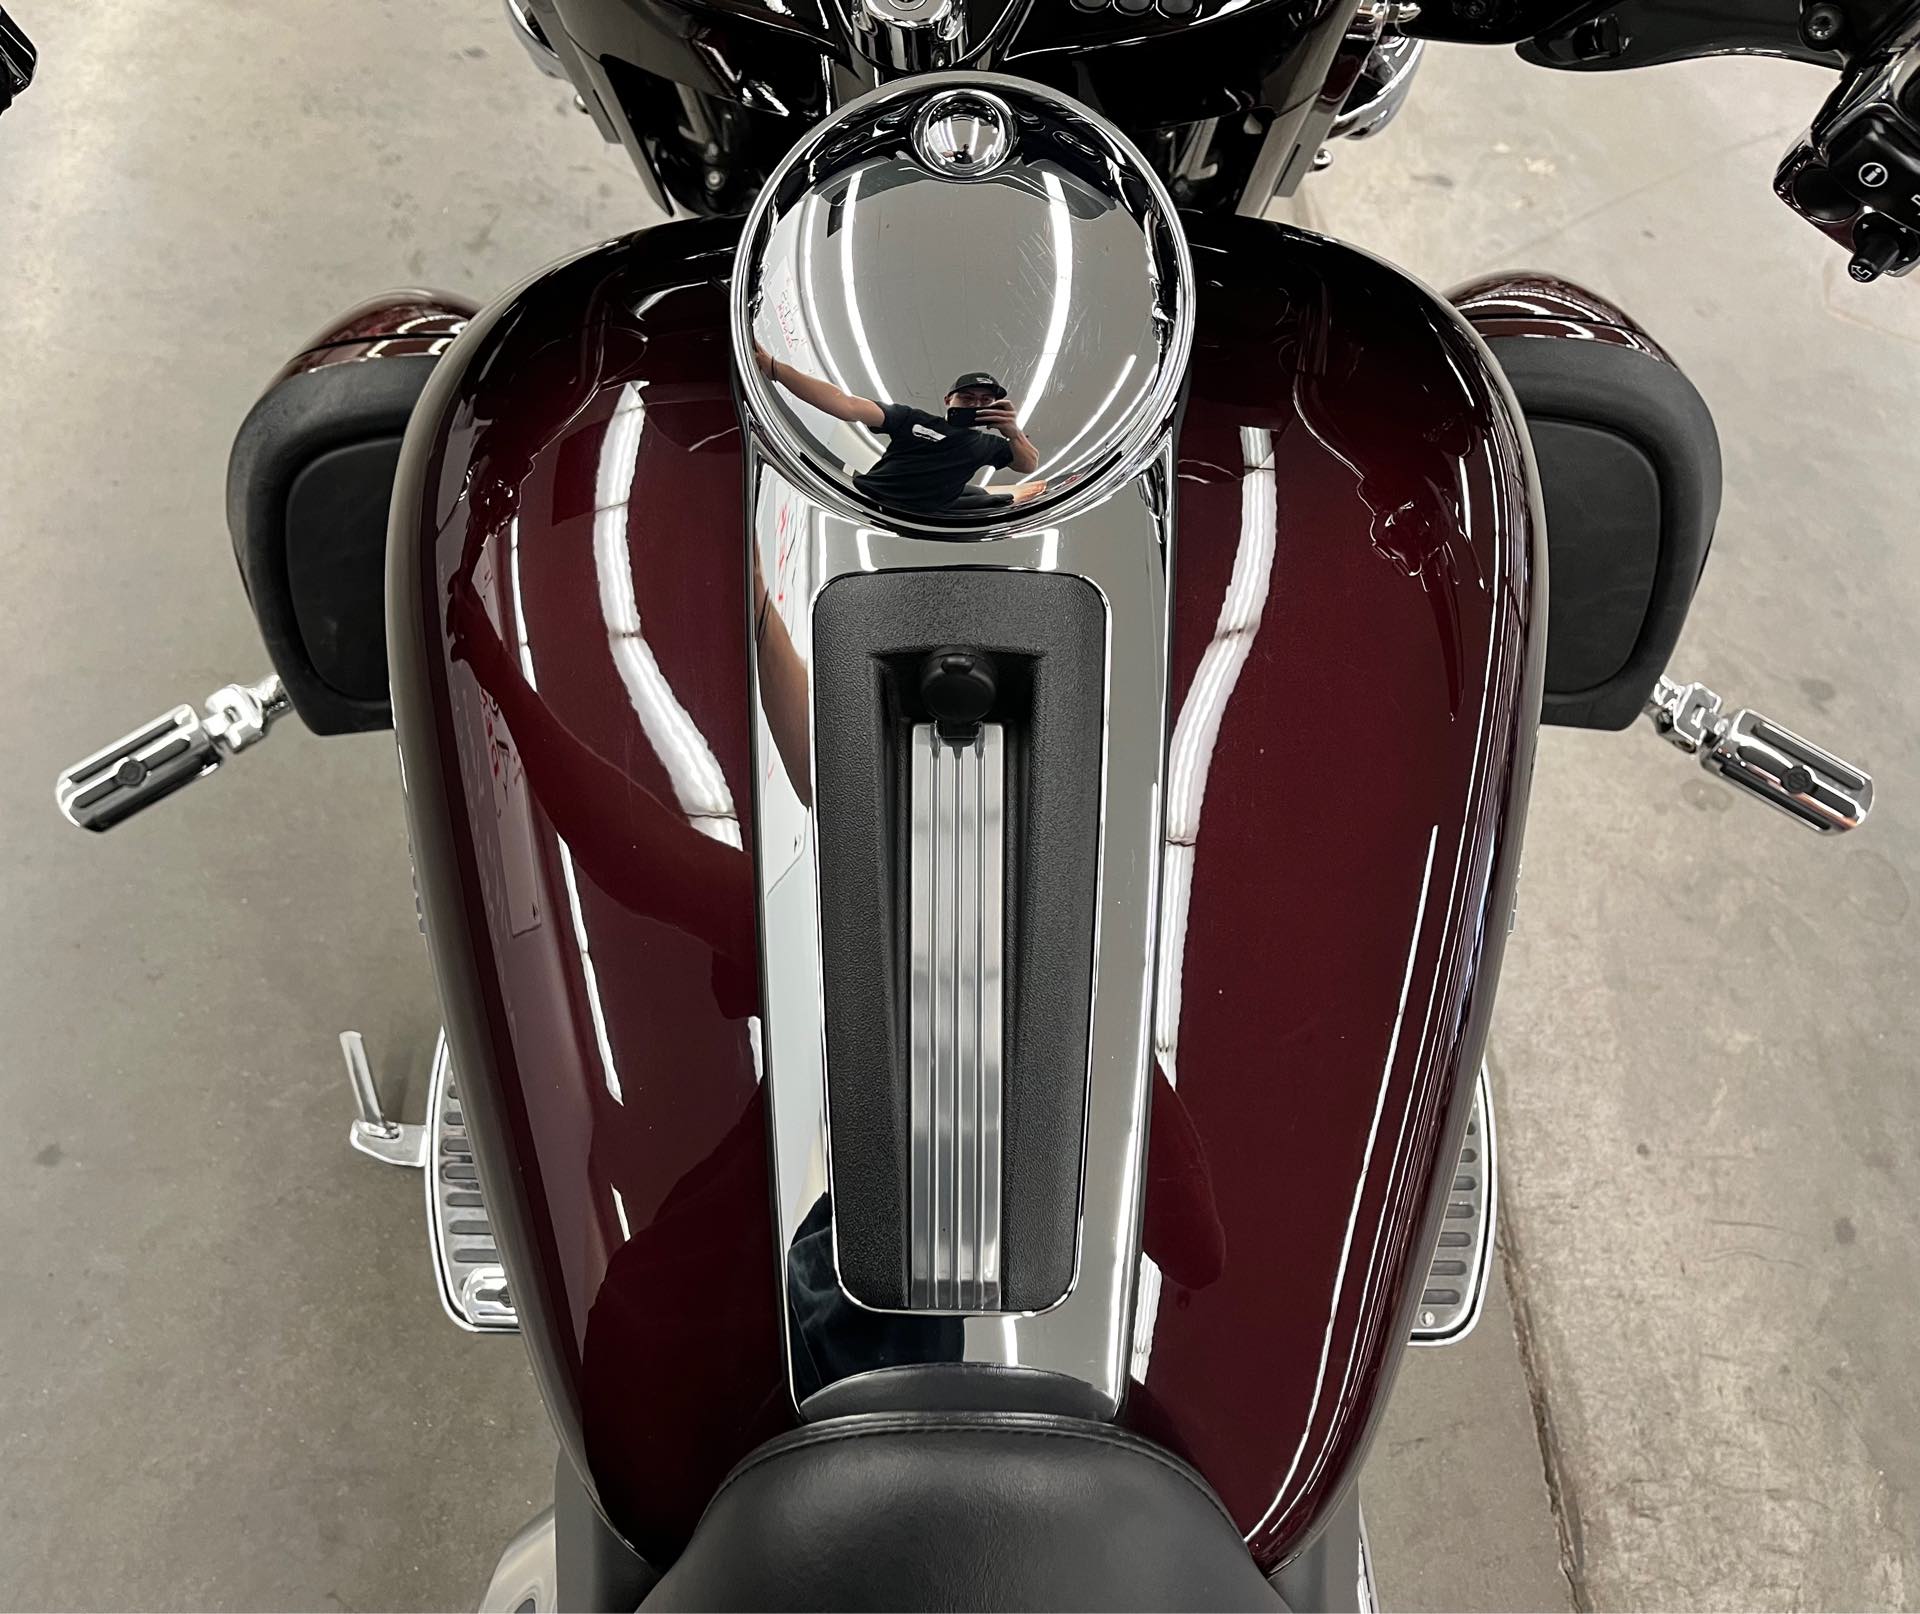 2018 Harley-Davidson Electra Glide Ultra Limited at Aces Motorcycles - Denver